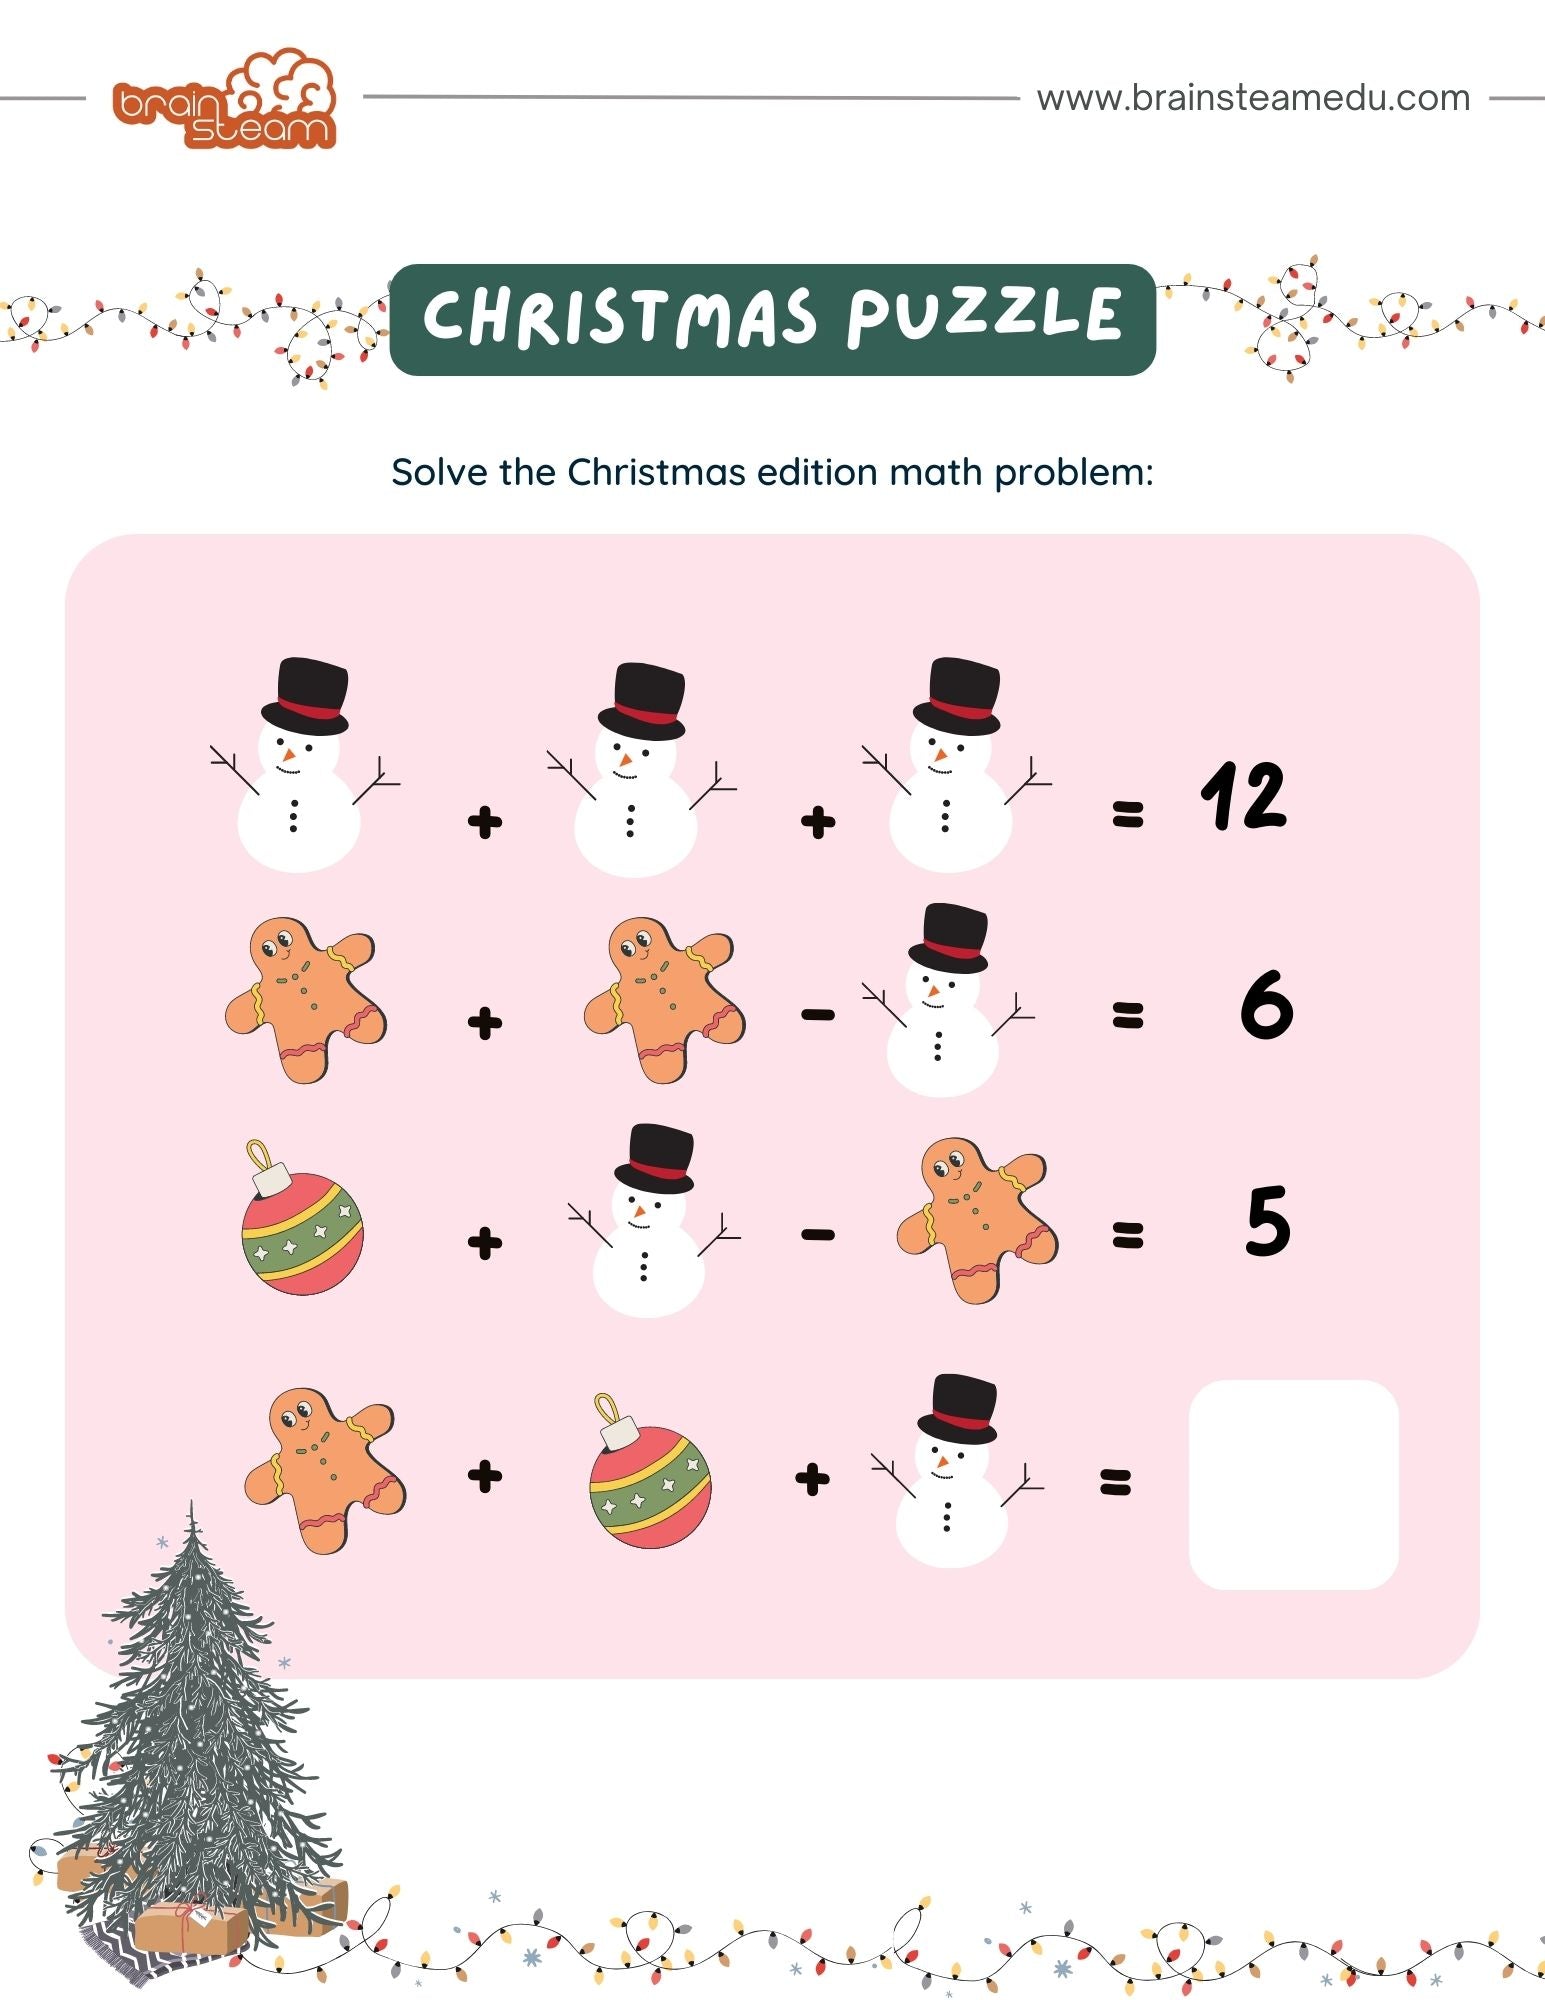 Christmas_puzzle-brainsteam